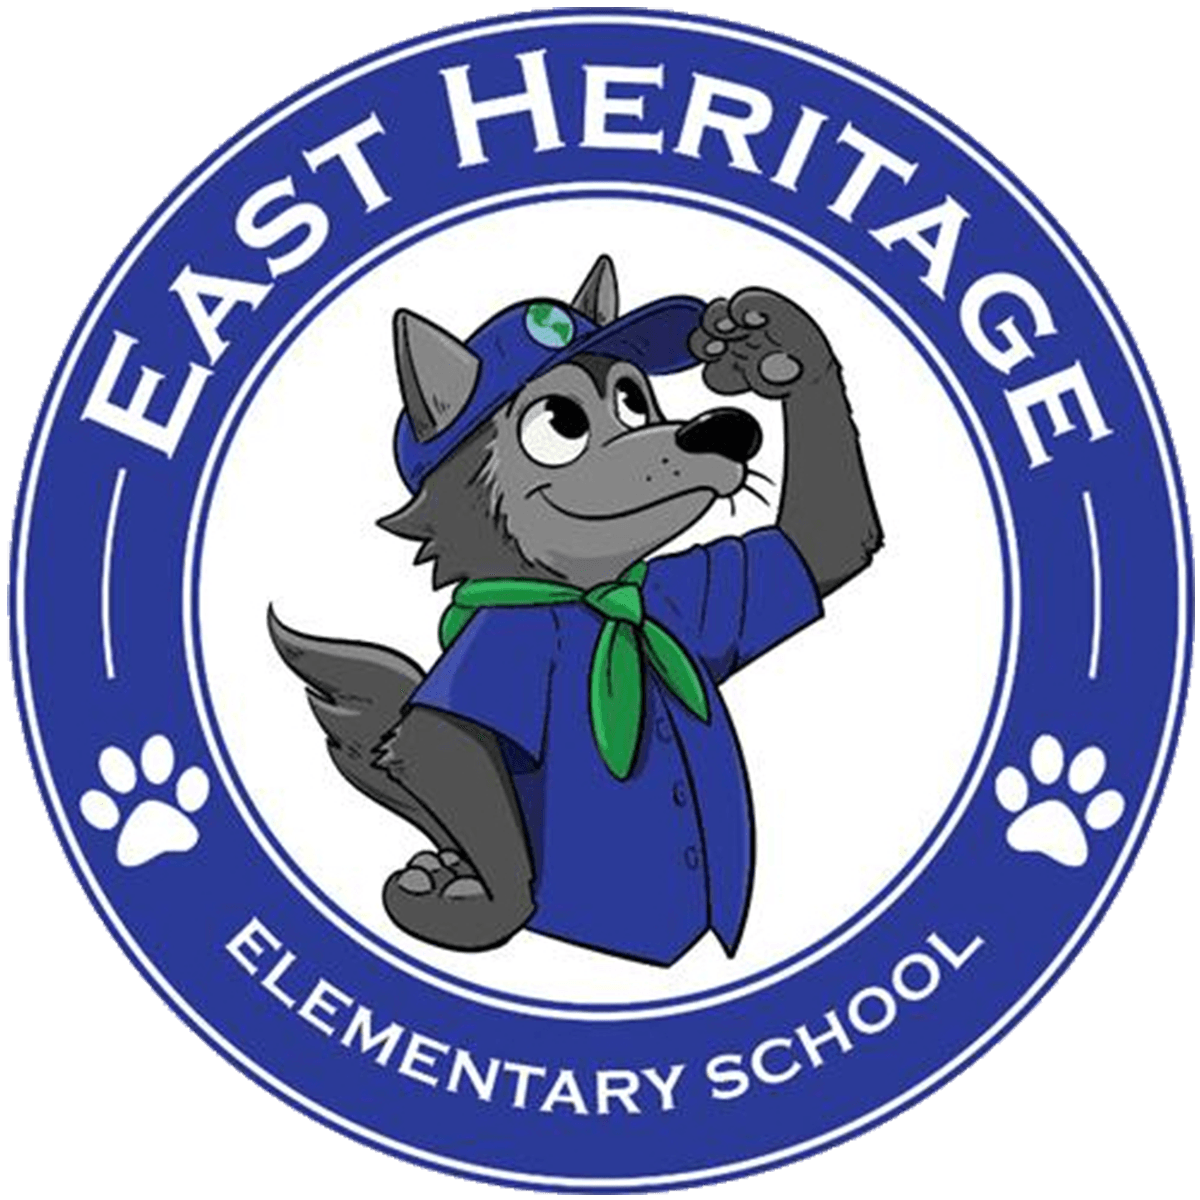 East Heritage Elementary School